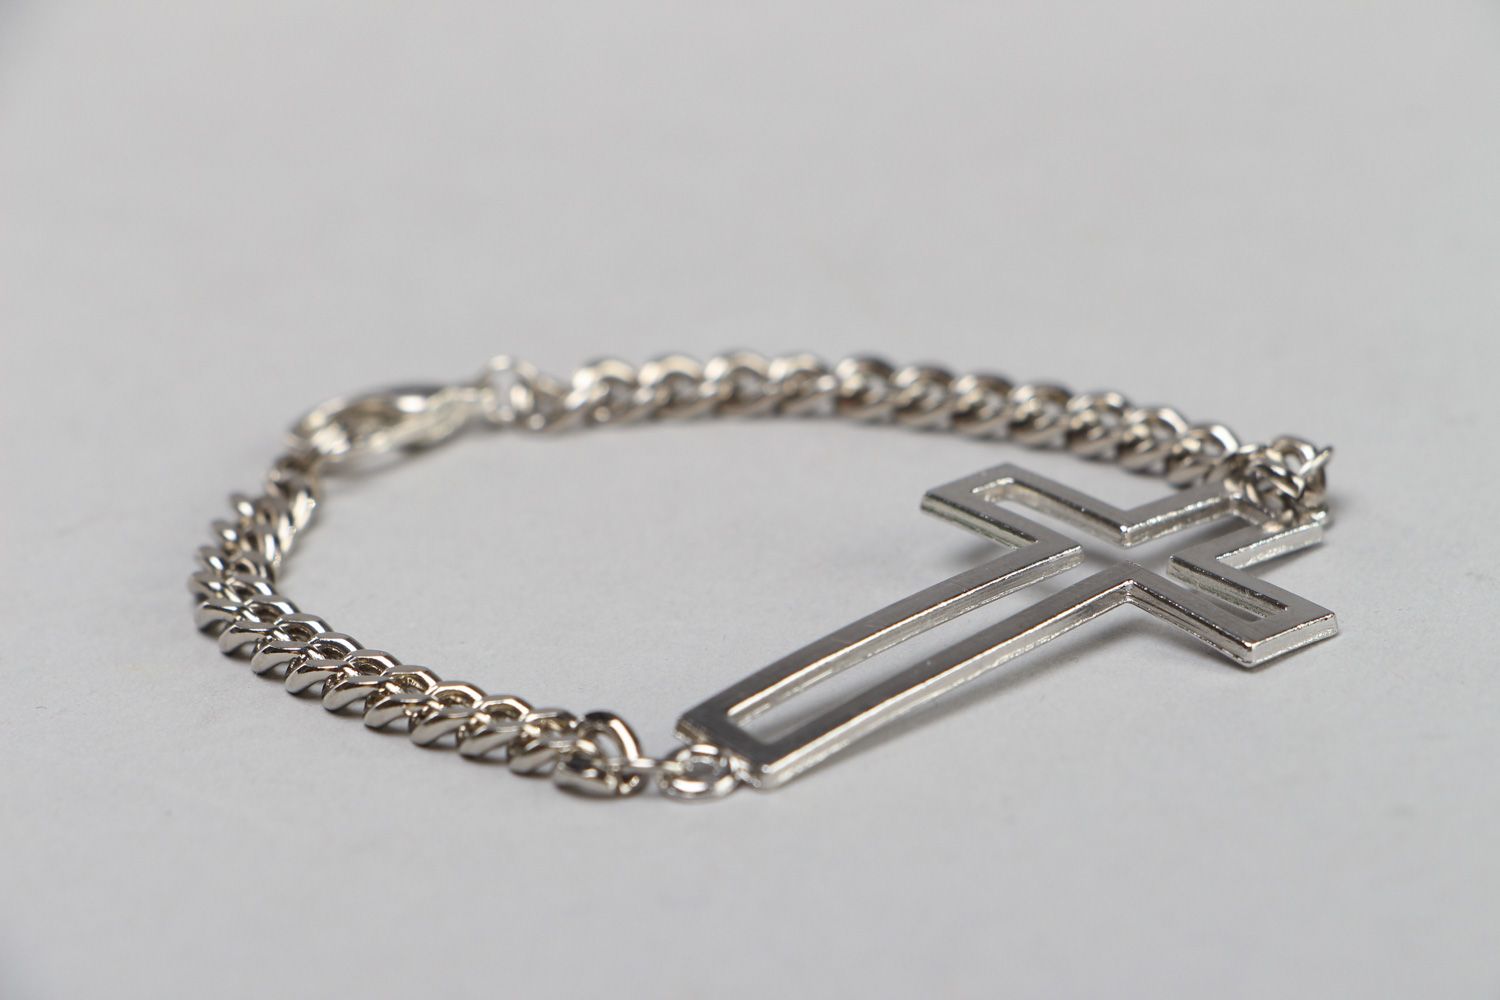 Handmade fashionable metal chain wrist bracelet with cross charm for women photo 2